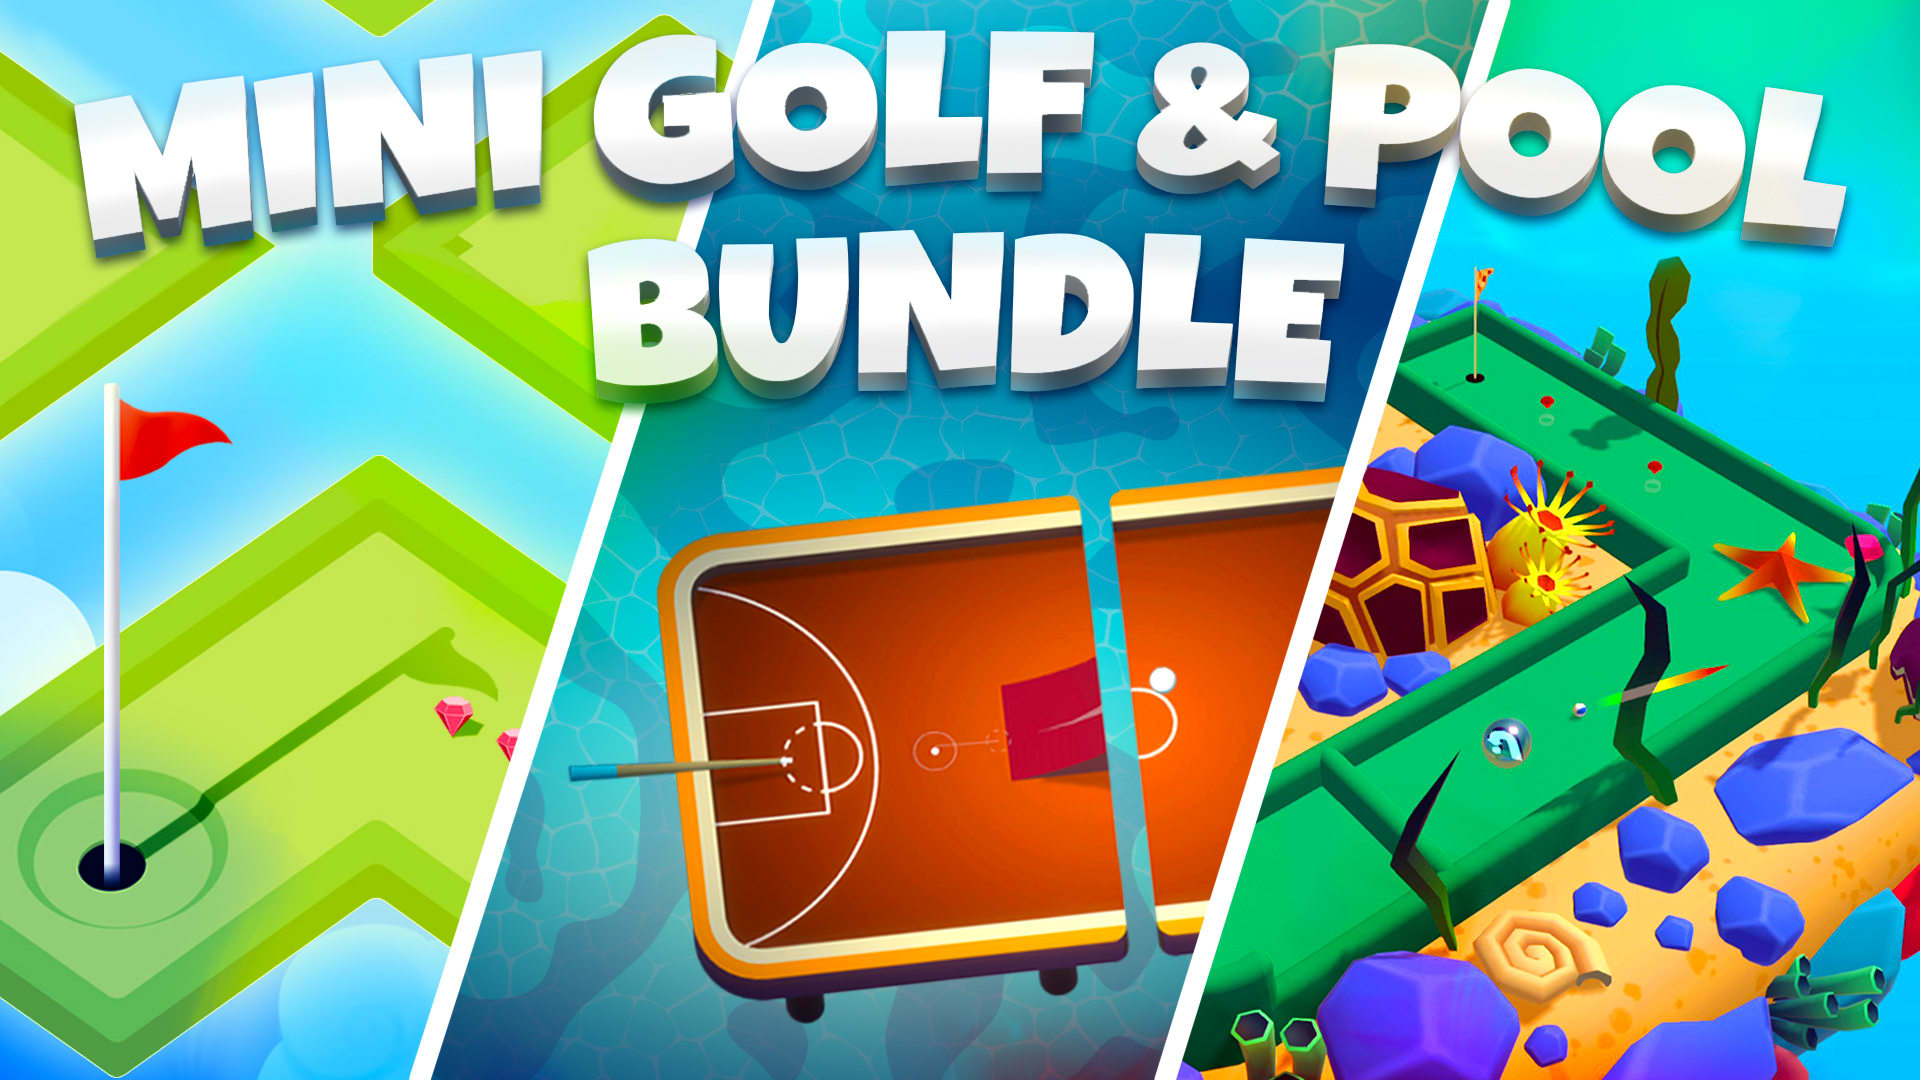 Mini Golf & Pool Bundle